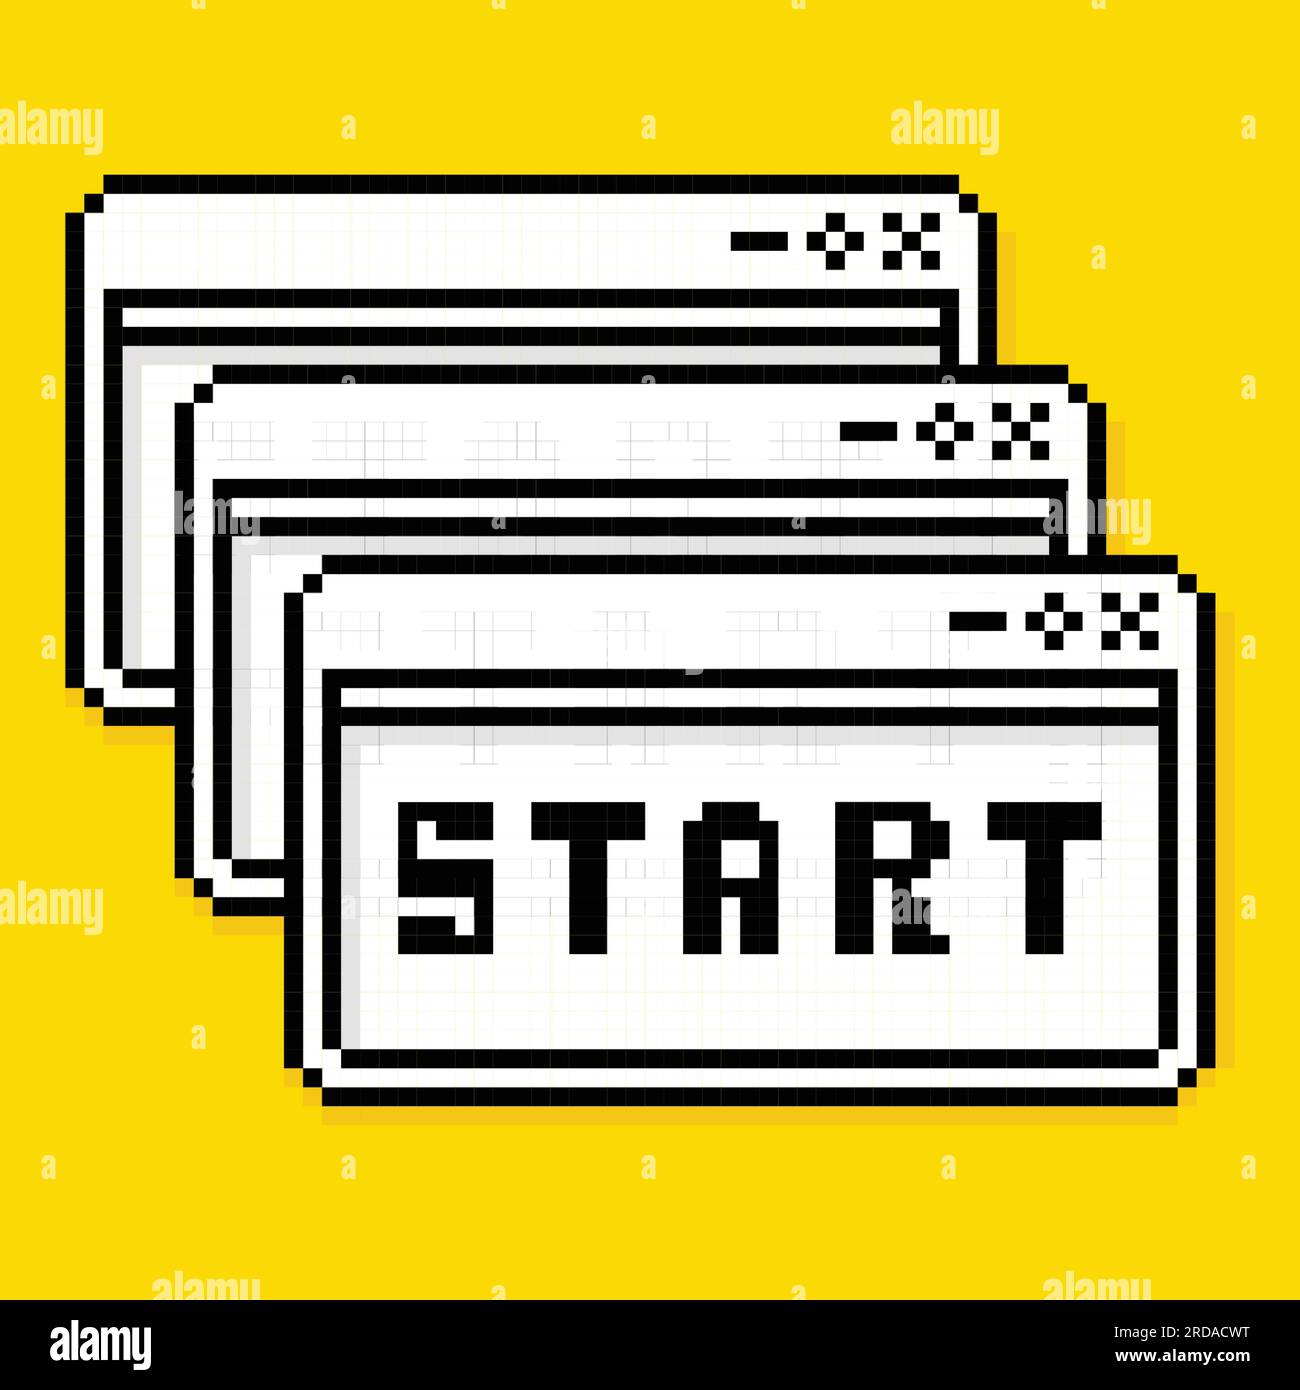 Start. User Interface in Retro Pixel Art Style. Vector Illustration. Desktop Computer Element. Stock Vector